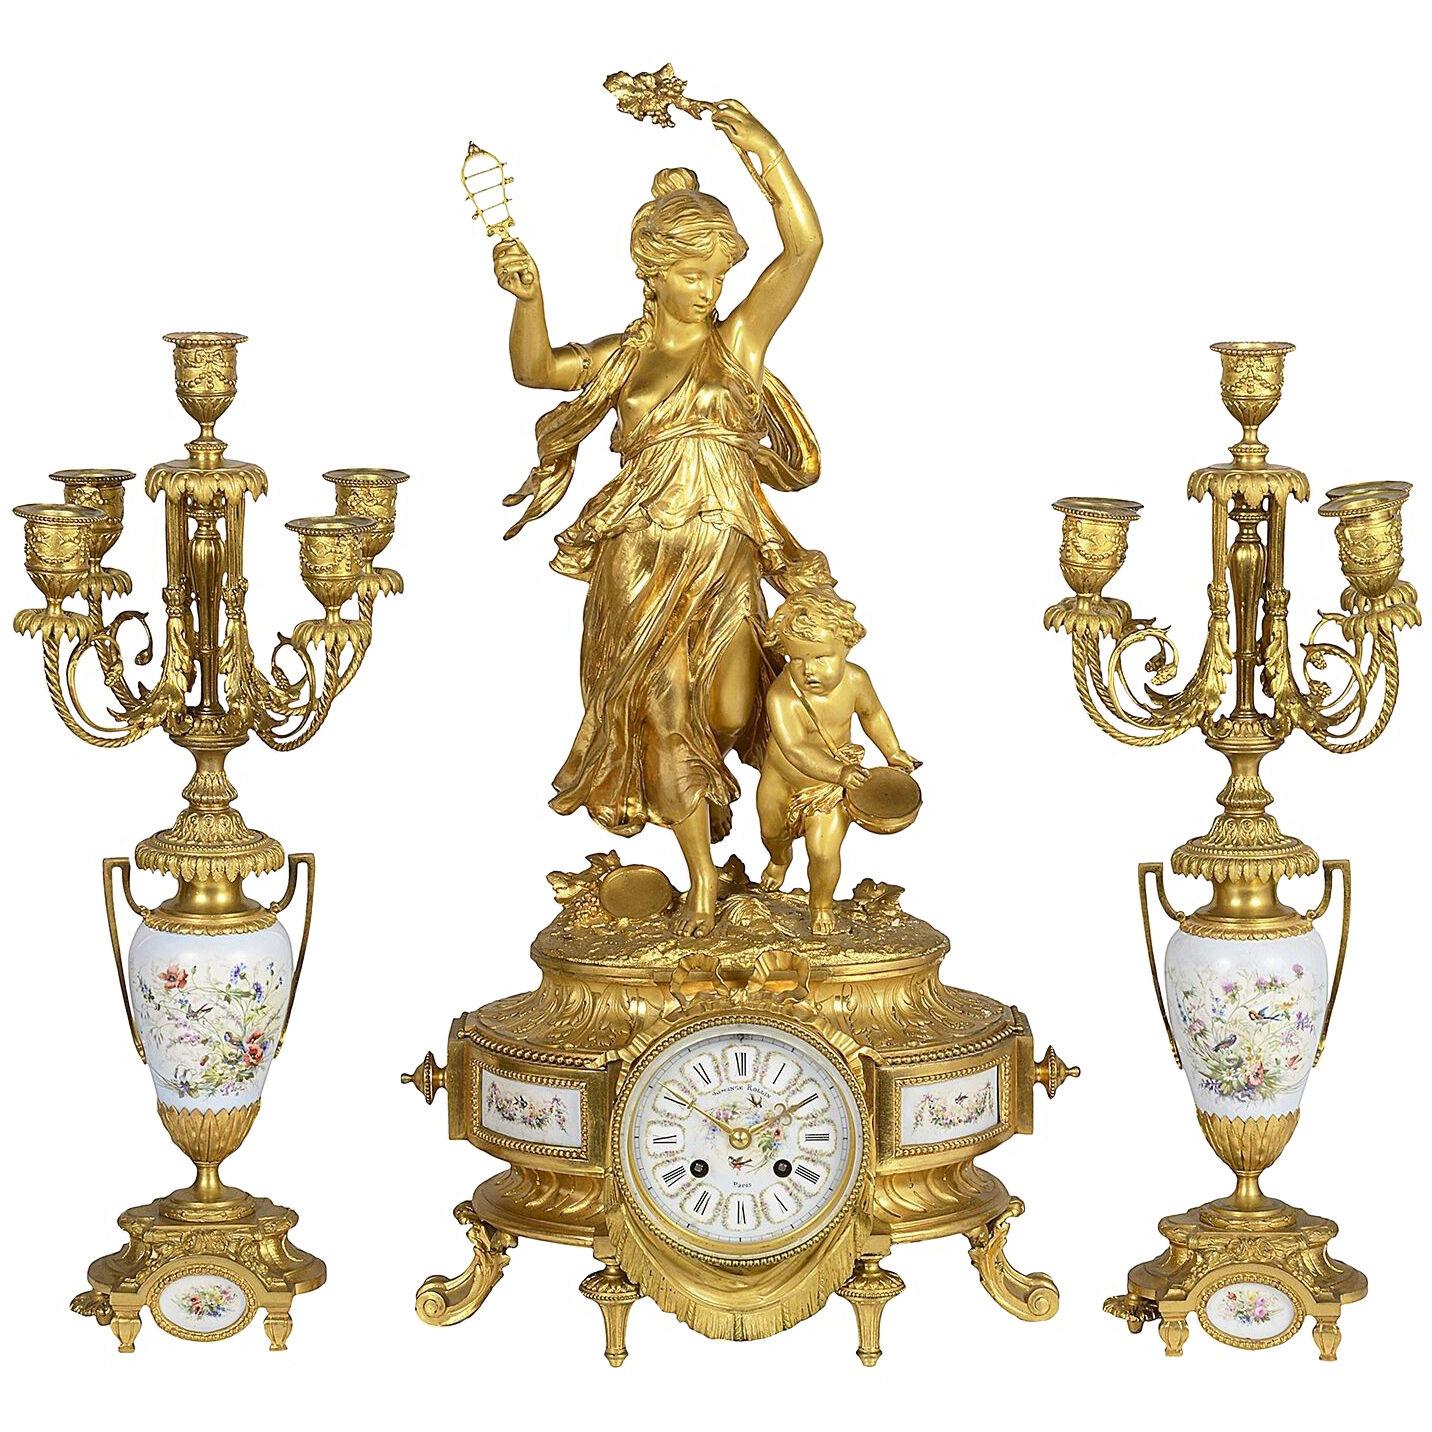 Louis XVI style mantel clock set, 19th Century, by Rollin, Paris